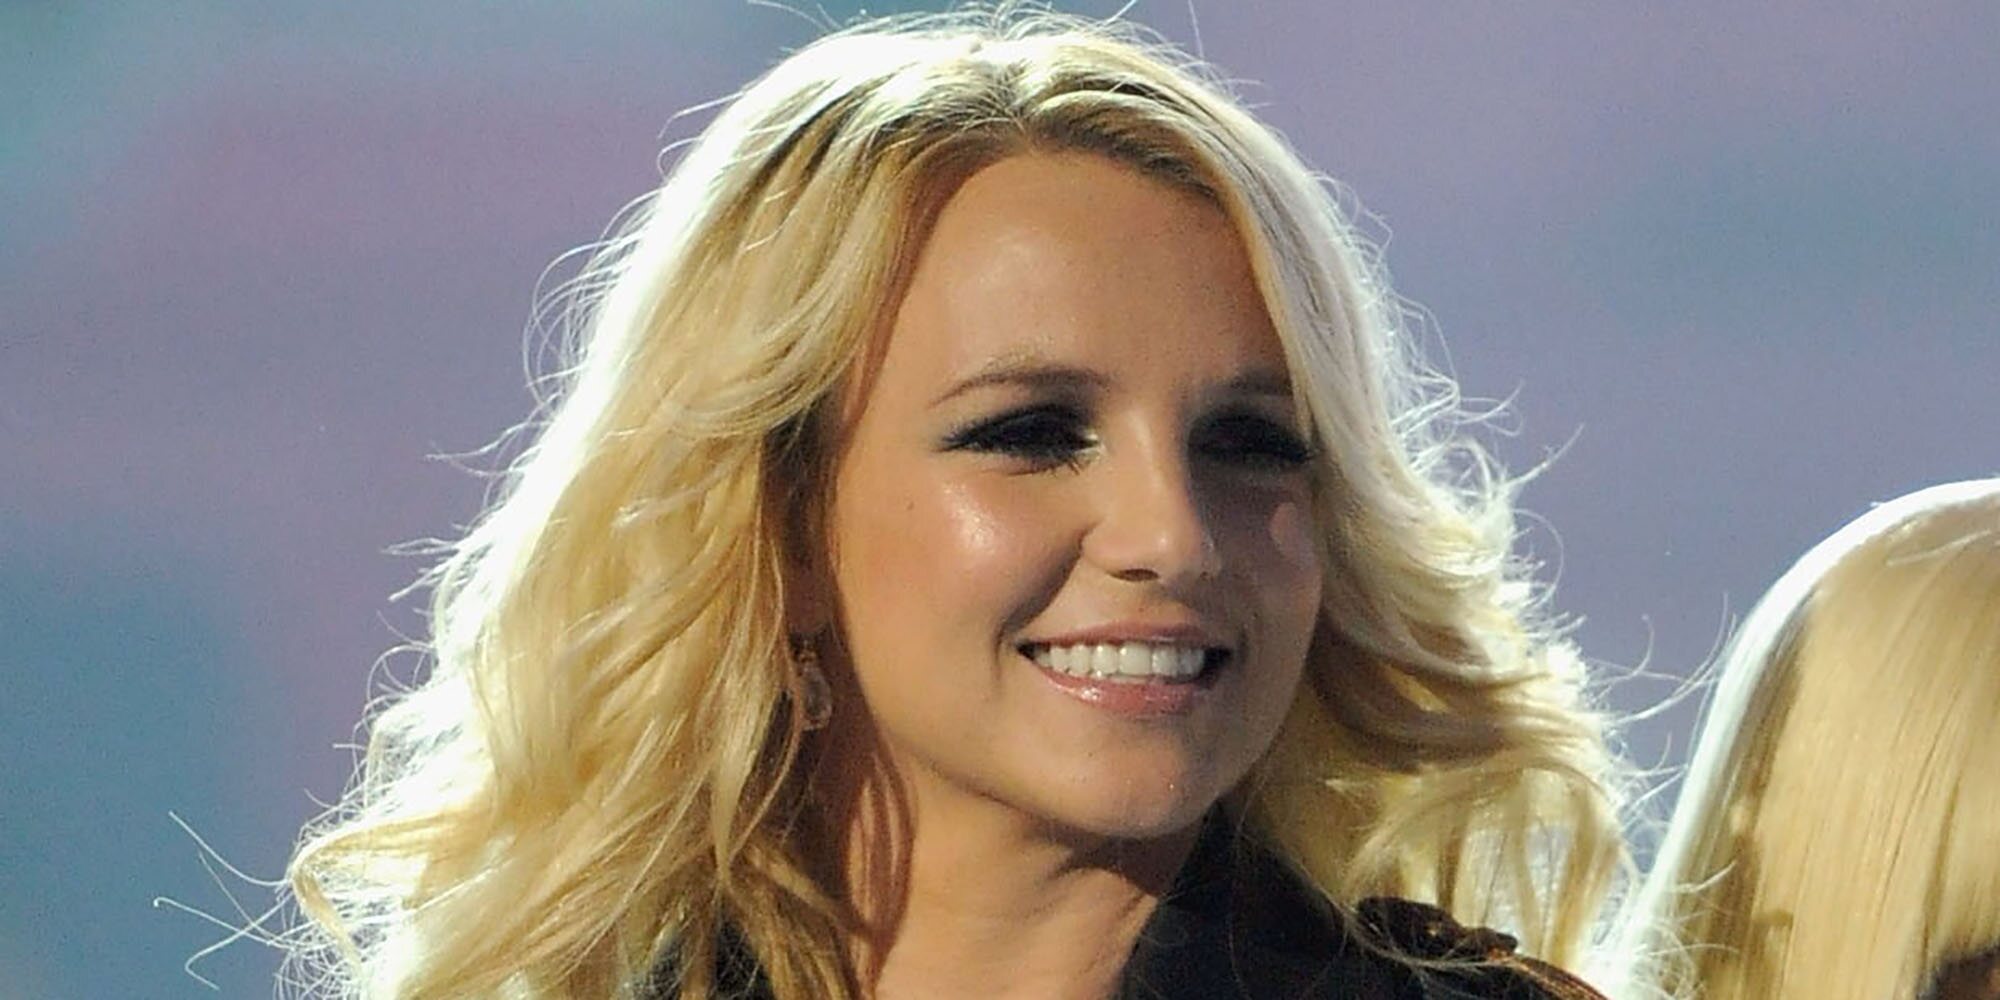 Britney Spears solicita que Jason Rubin sustituya a su padre como su tutor legal